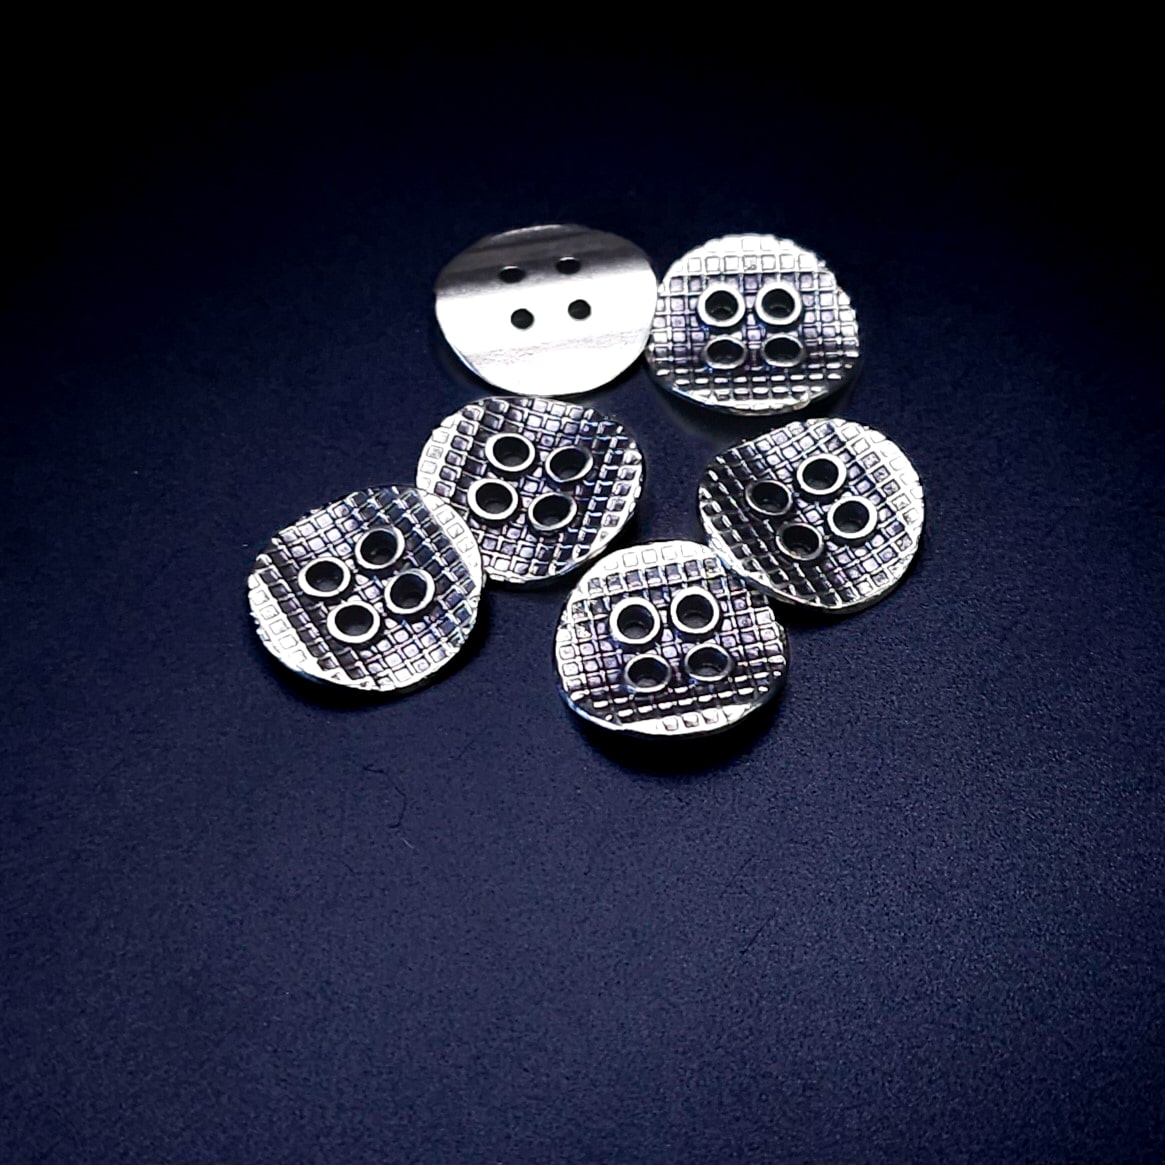 Buttons #544 - 15 mm